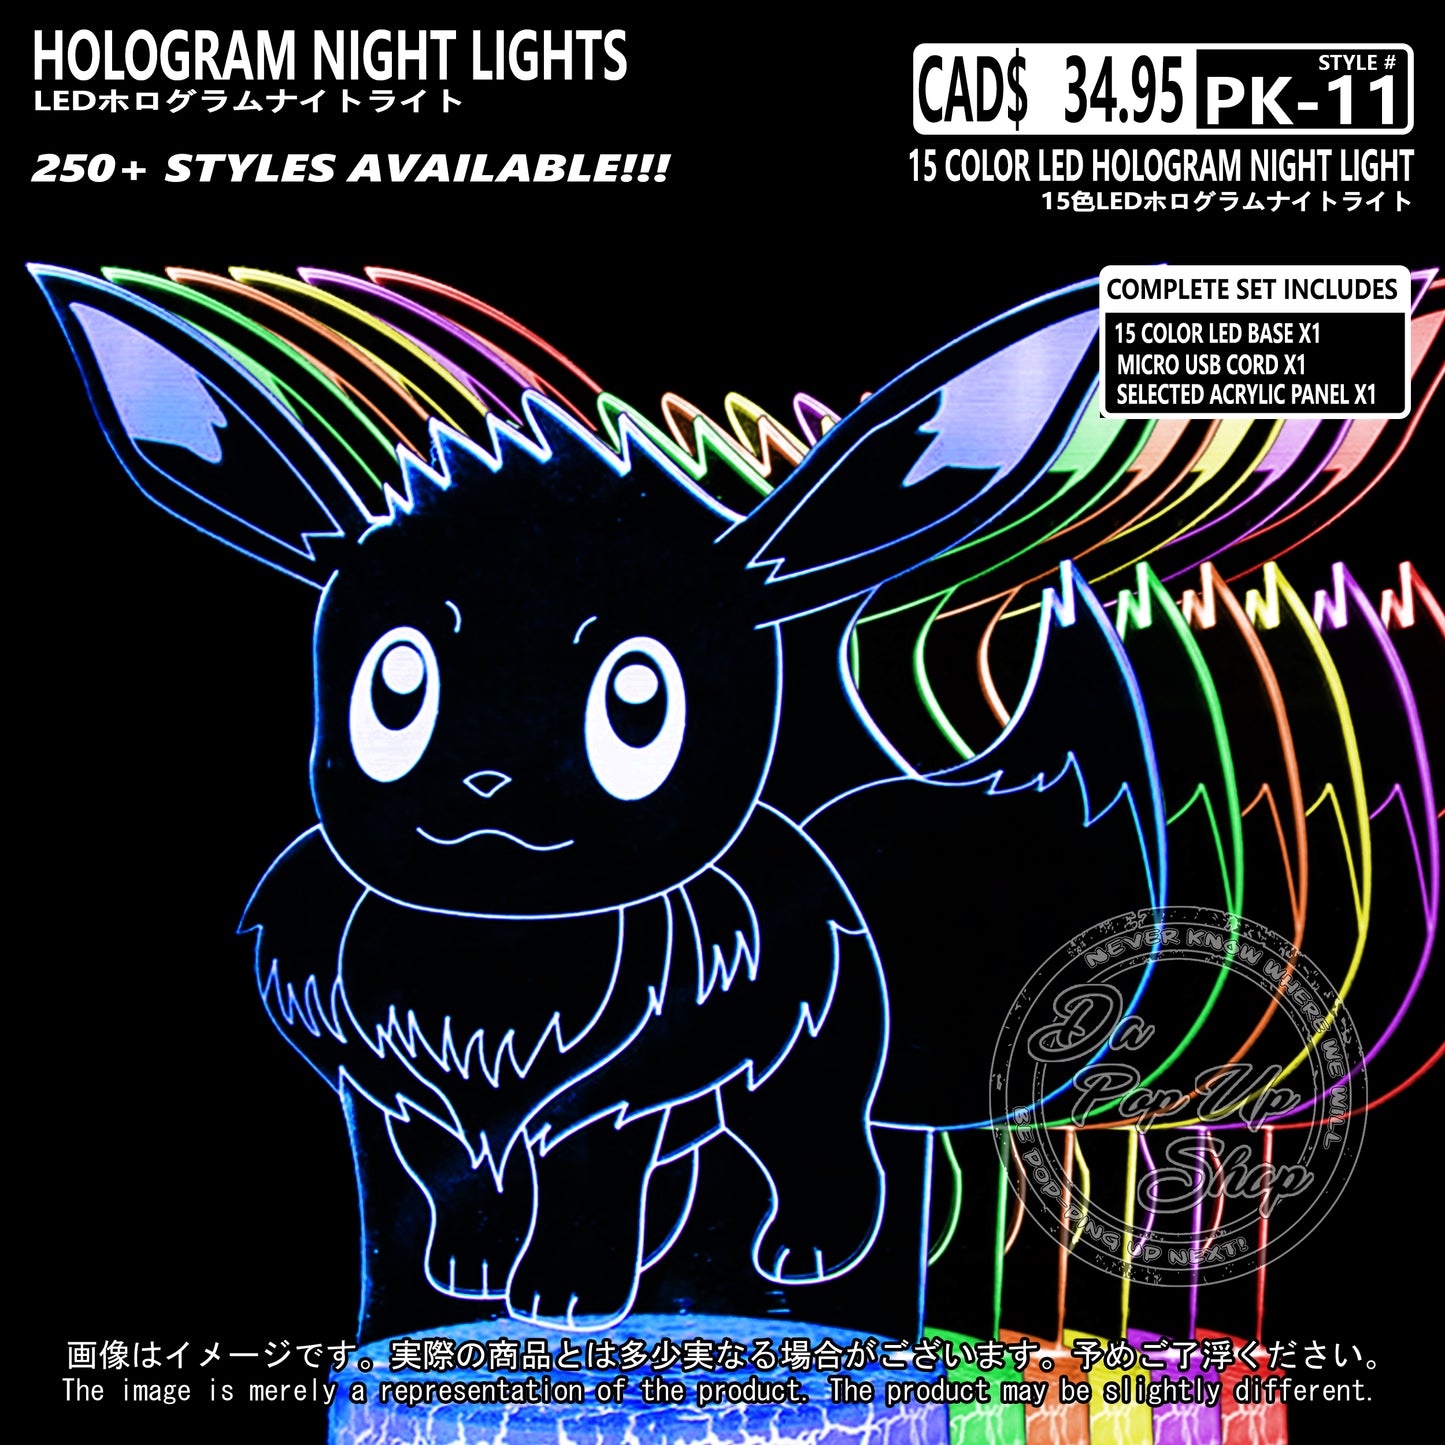 (PKM-11) EEVEE Pokemon Hologram LED Night Light